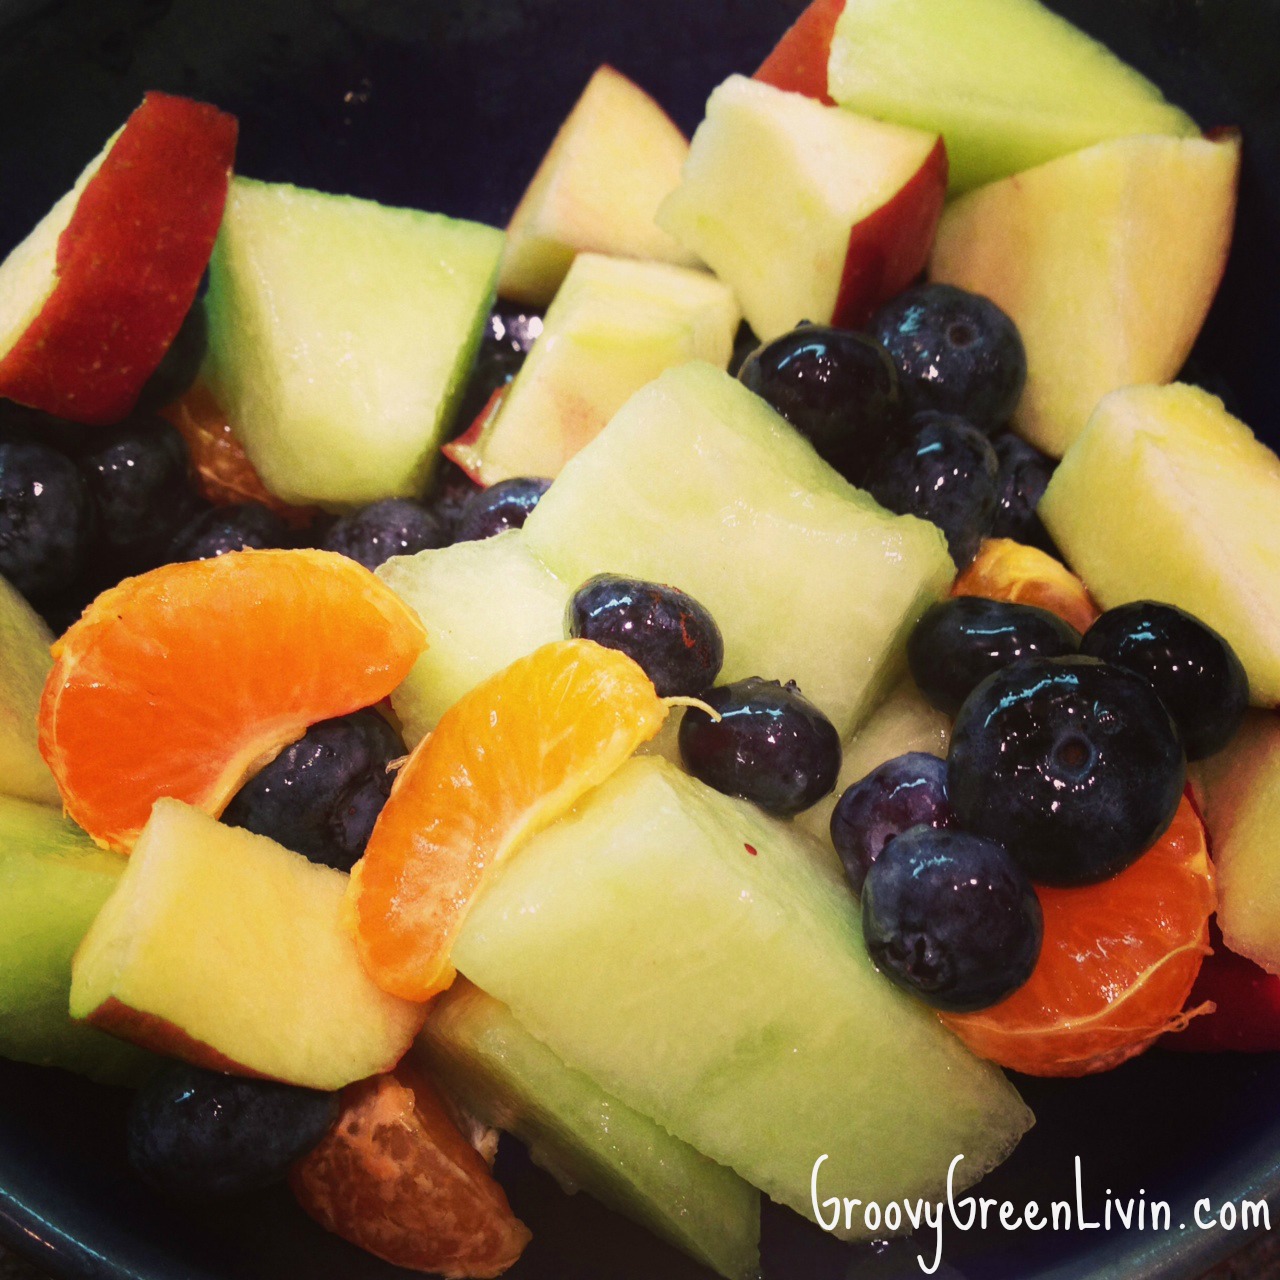 Groovy Green Livin Instagram Fruit Salad